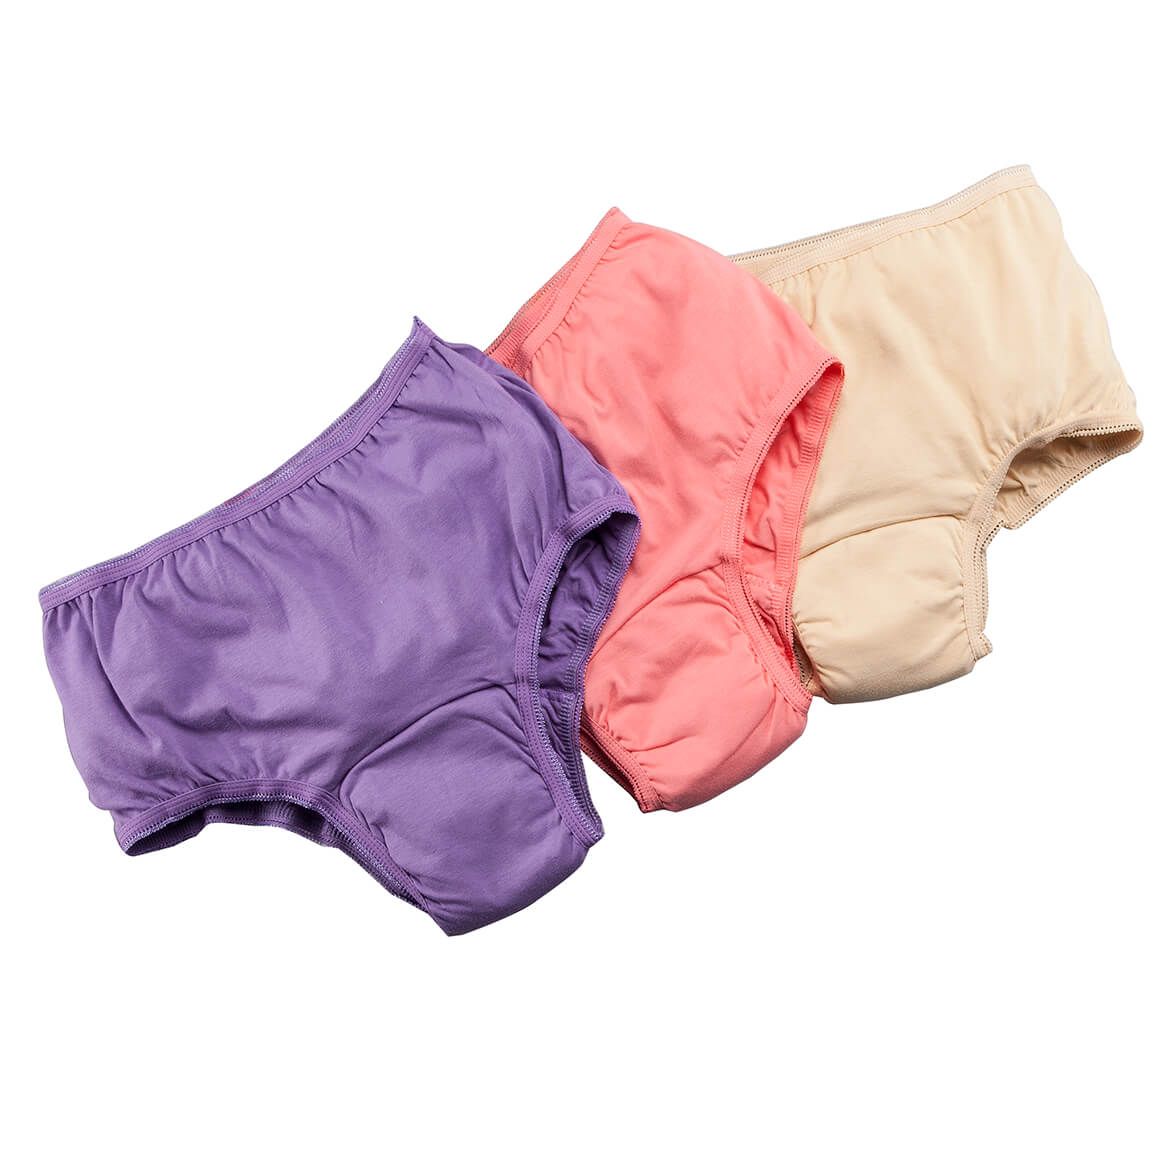 Incontinence Underwear for Women 2 Pack Women's Incontinence Briefs  Washable Incontinence Underwear for Women Incontinence Briefs Leak  Protection